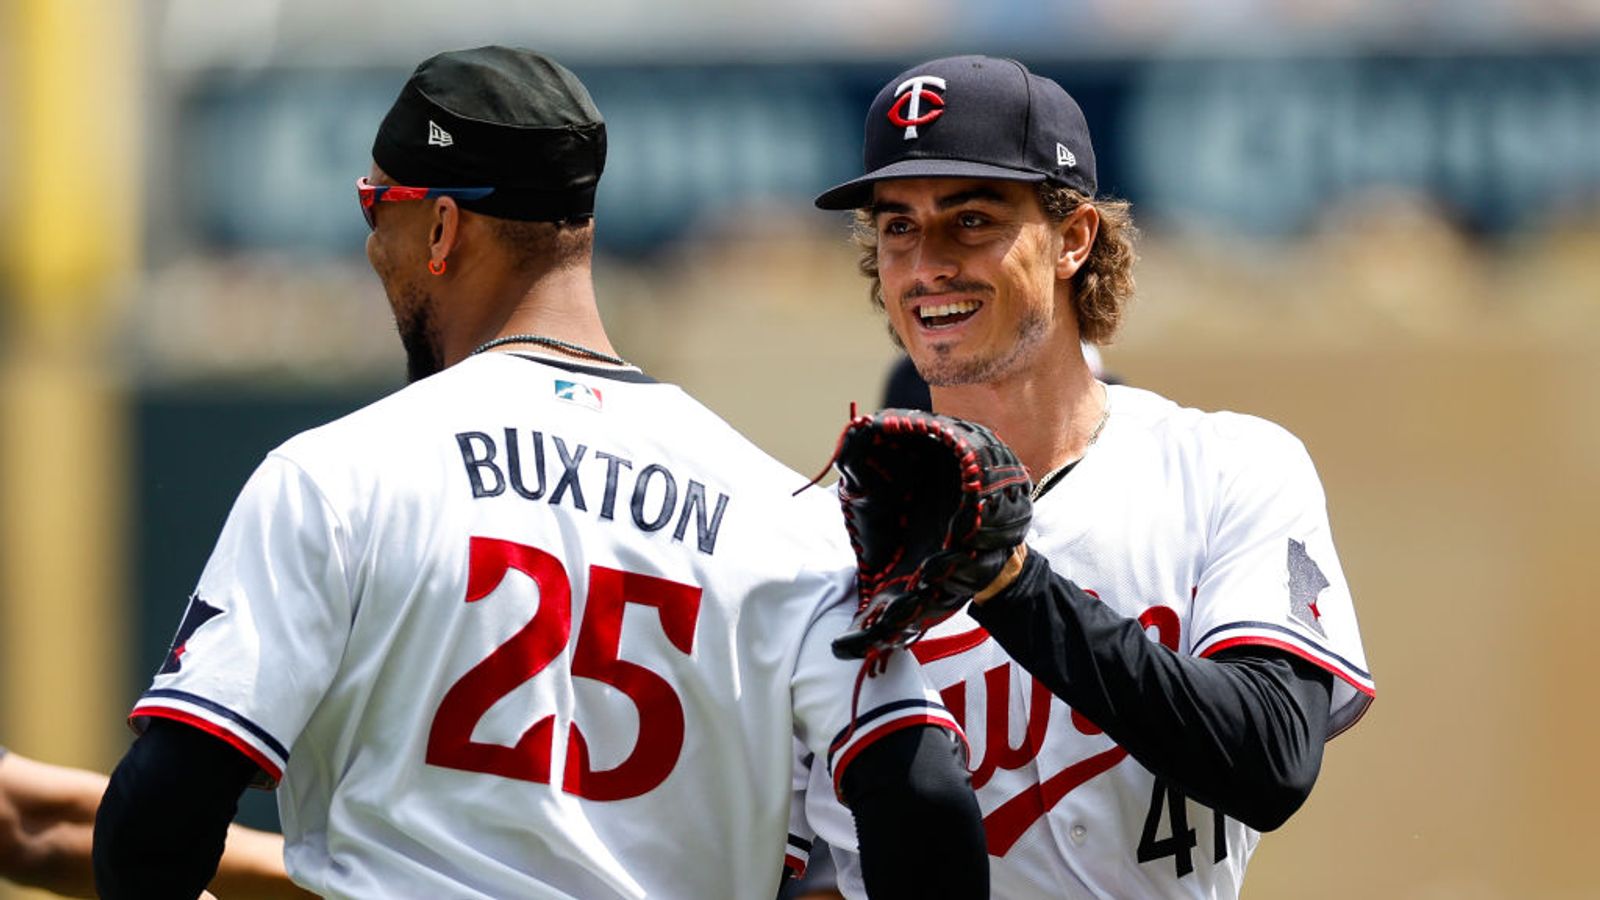 Ryan strong, Twins' bats heat up in Boston's Fenway opener